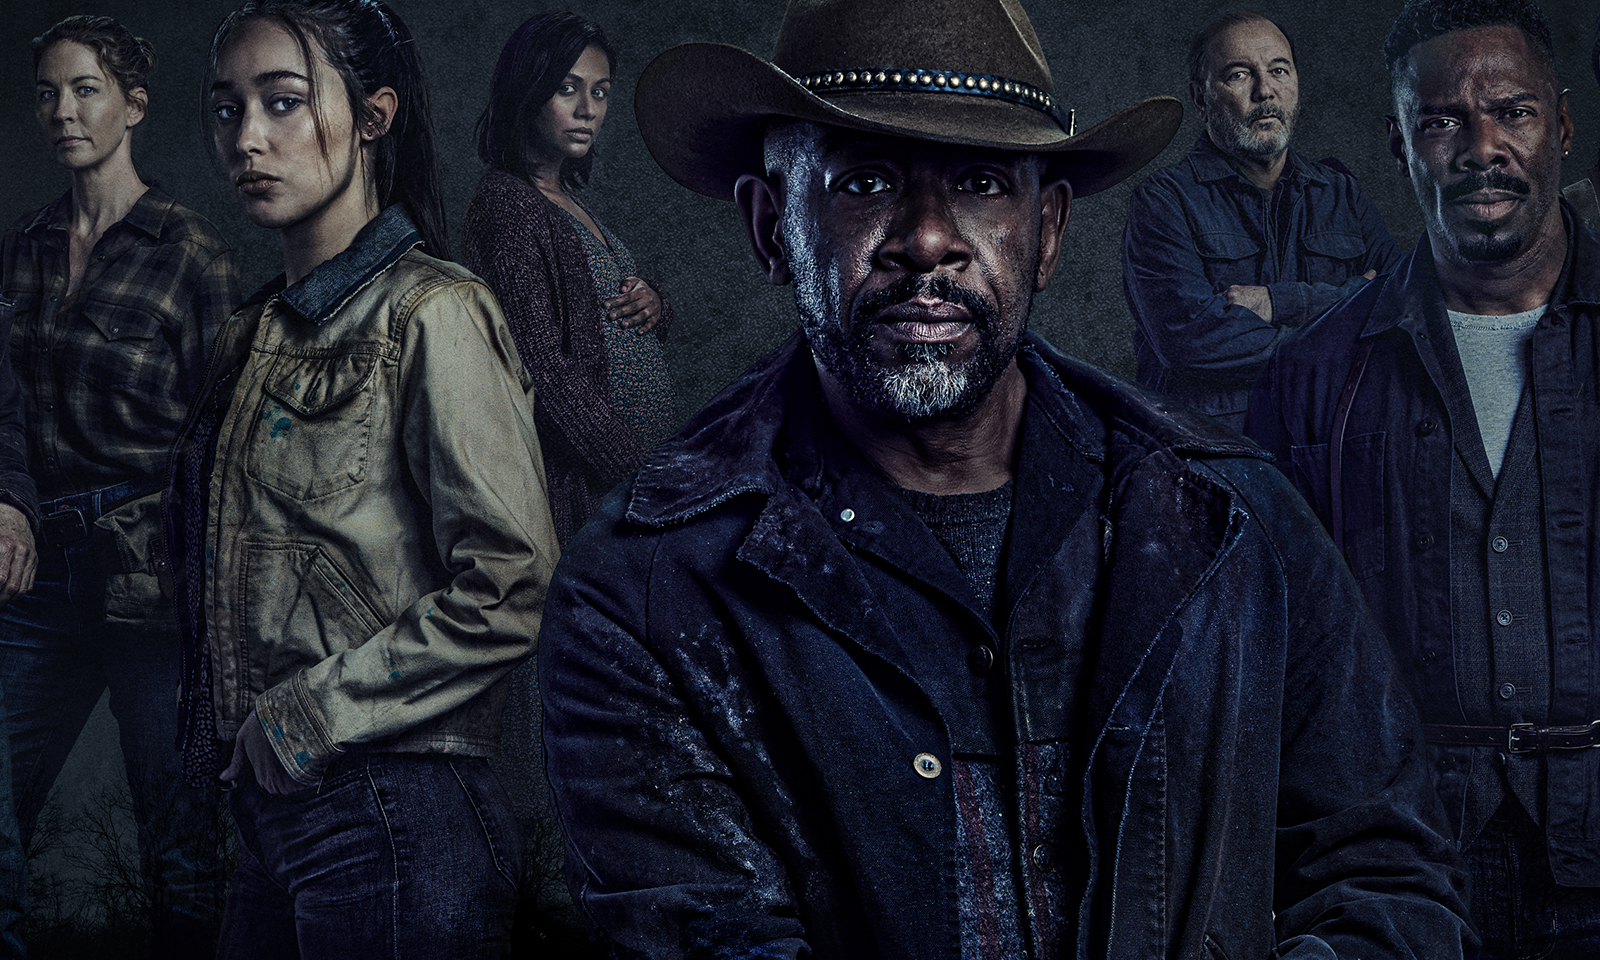 Fear the Walking Dead: Onde assistir à série e sua 8ª temporada